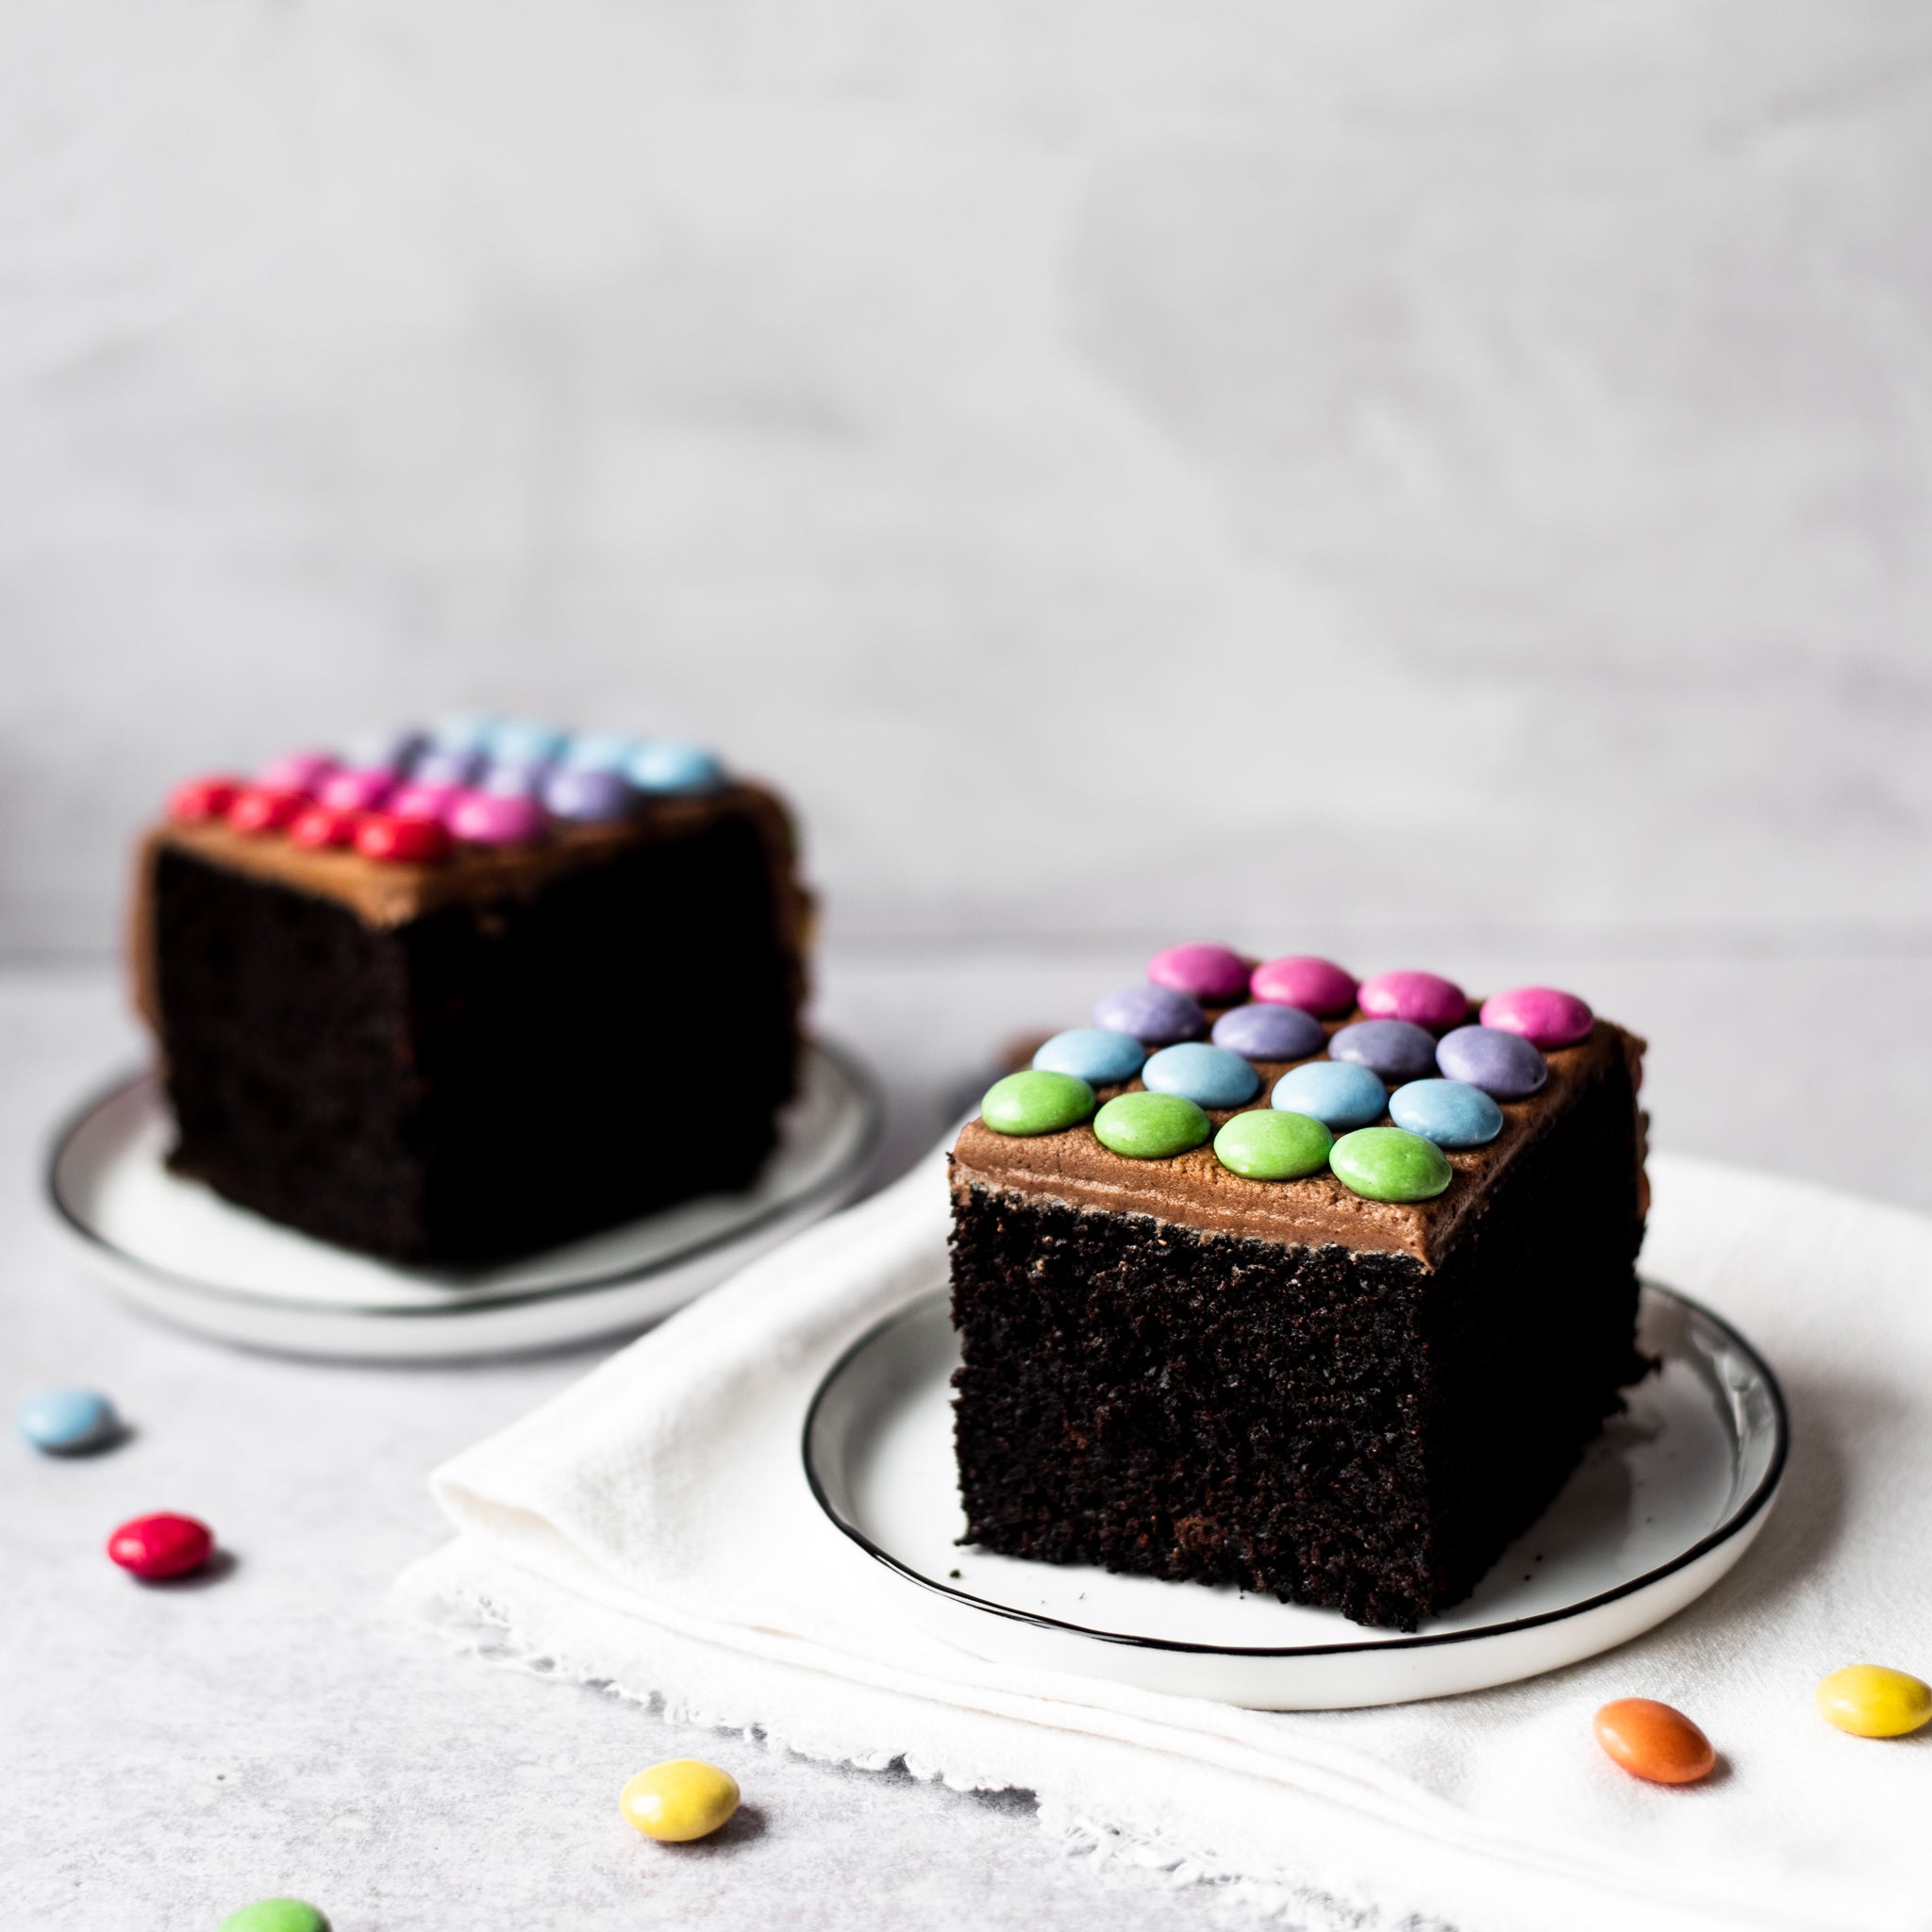 Chocolate Smarties Cake | How to Make a Smarties Chocolate Cake ...